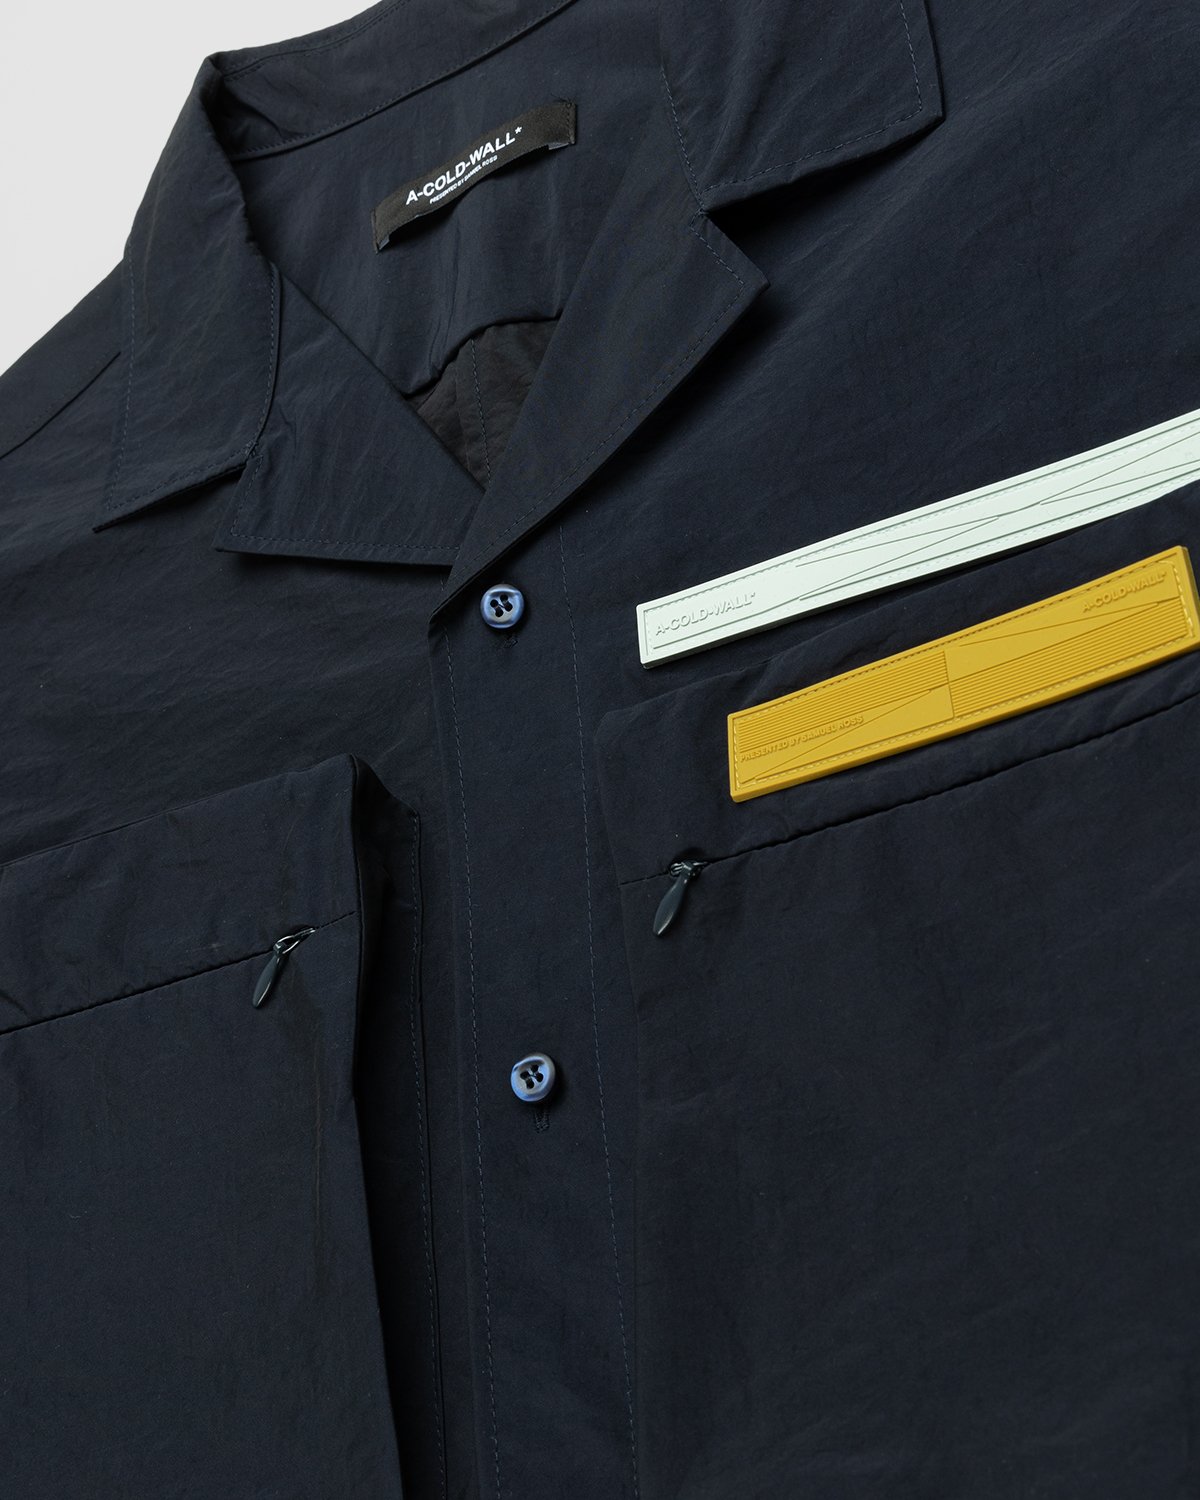 A-Cold-Wall* - Cuban Collar Shirt Navy - Clothing - Blue - Image 4